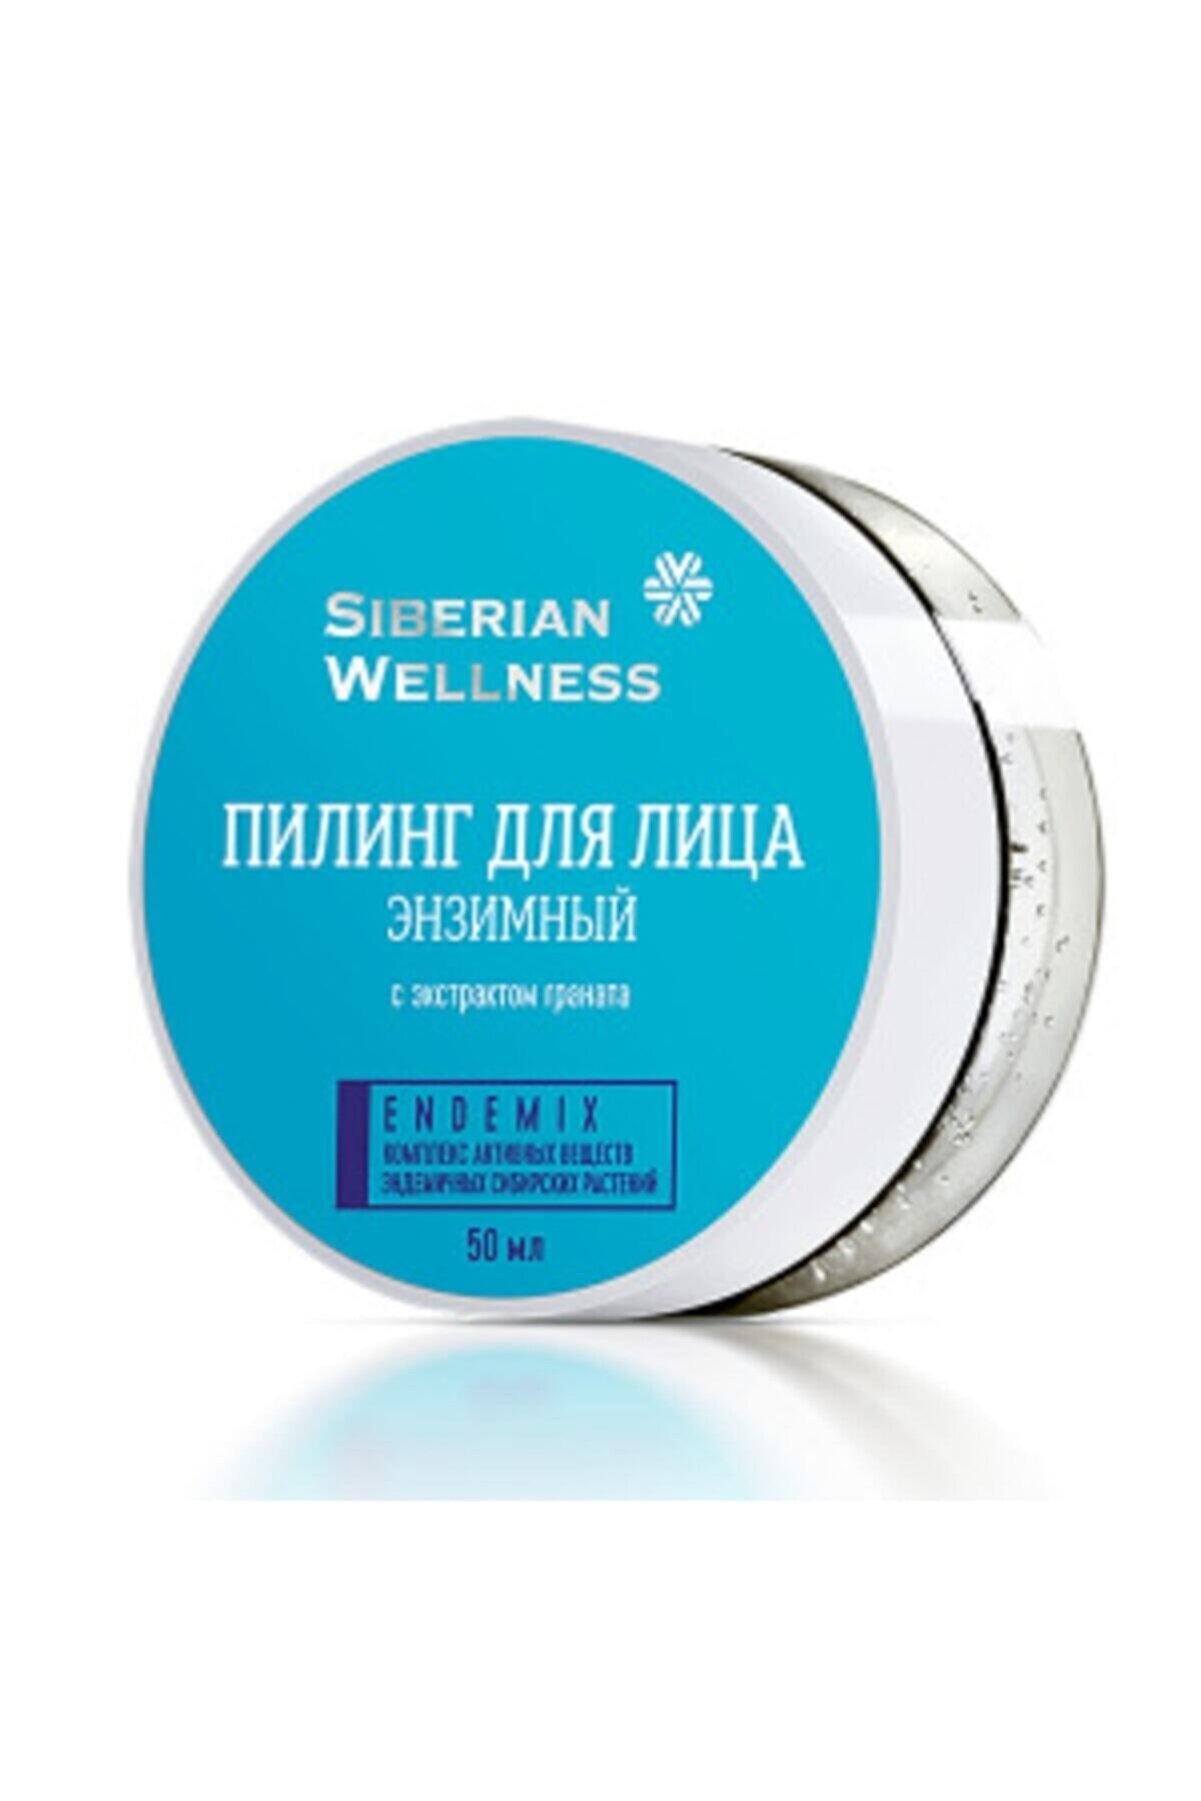 Siberian Wellness Arenagym